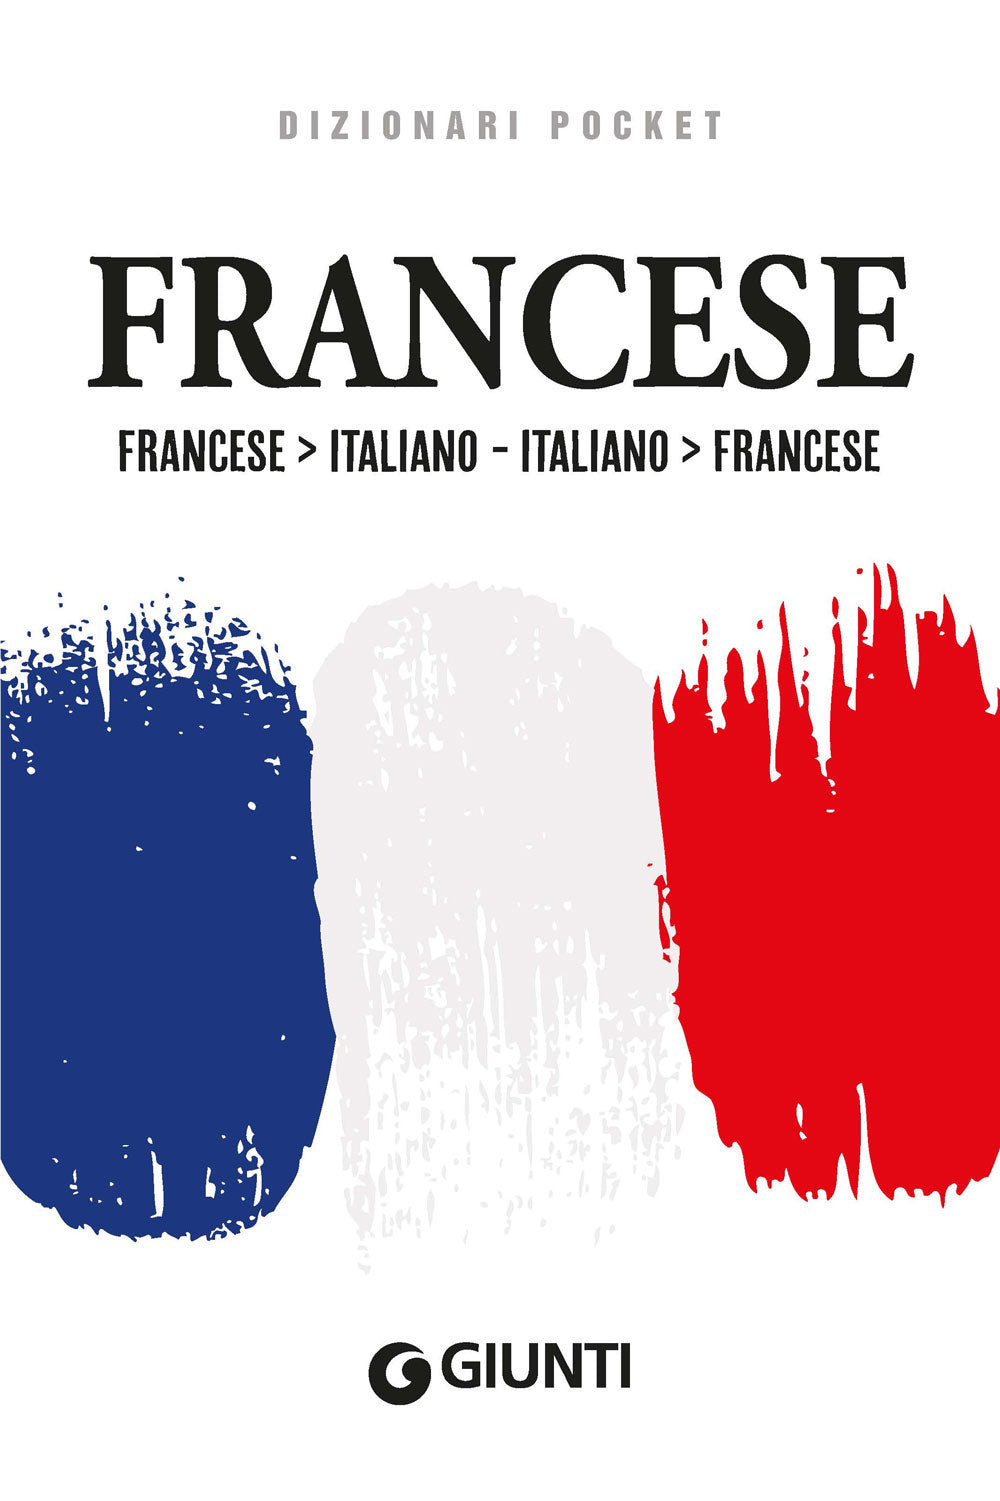 Dizionario francese-italiano italiano-francese